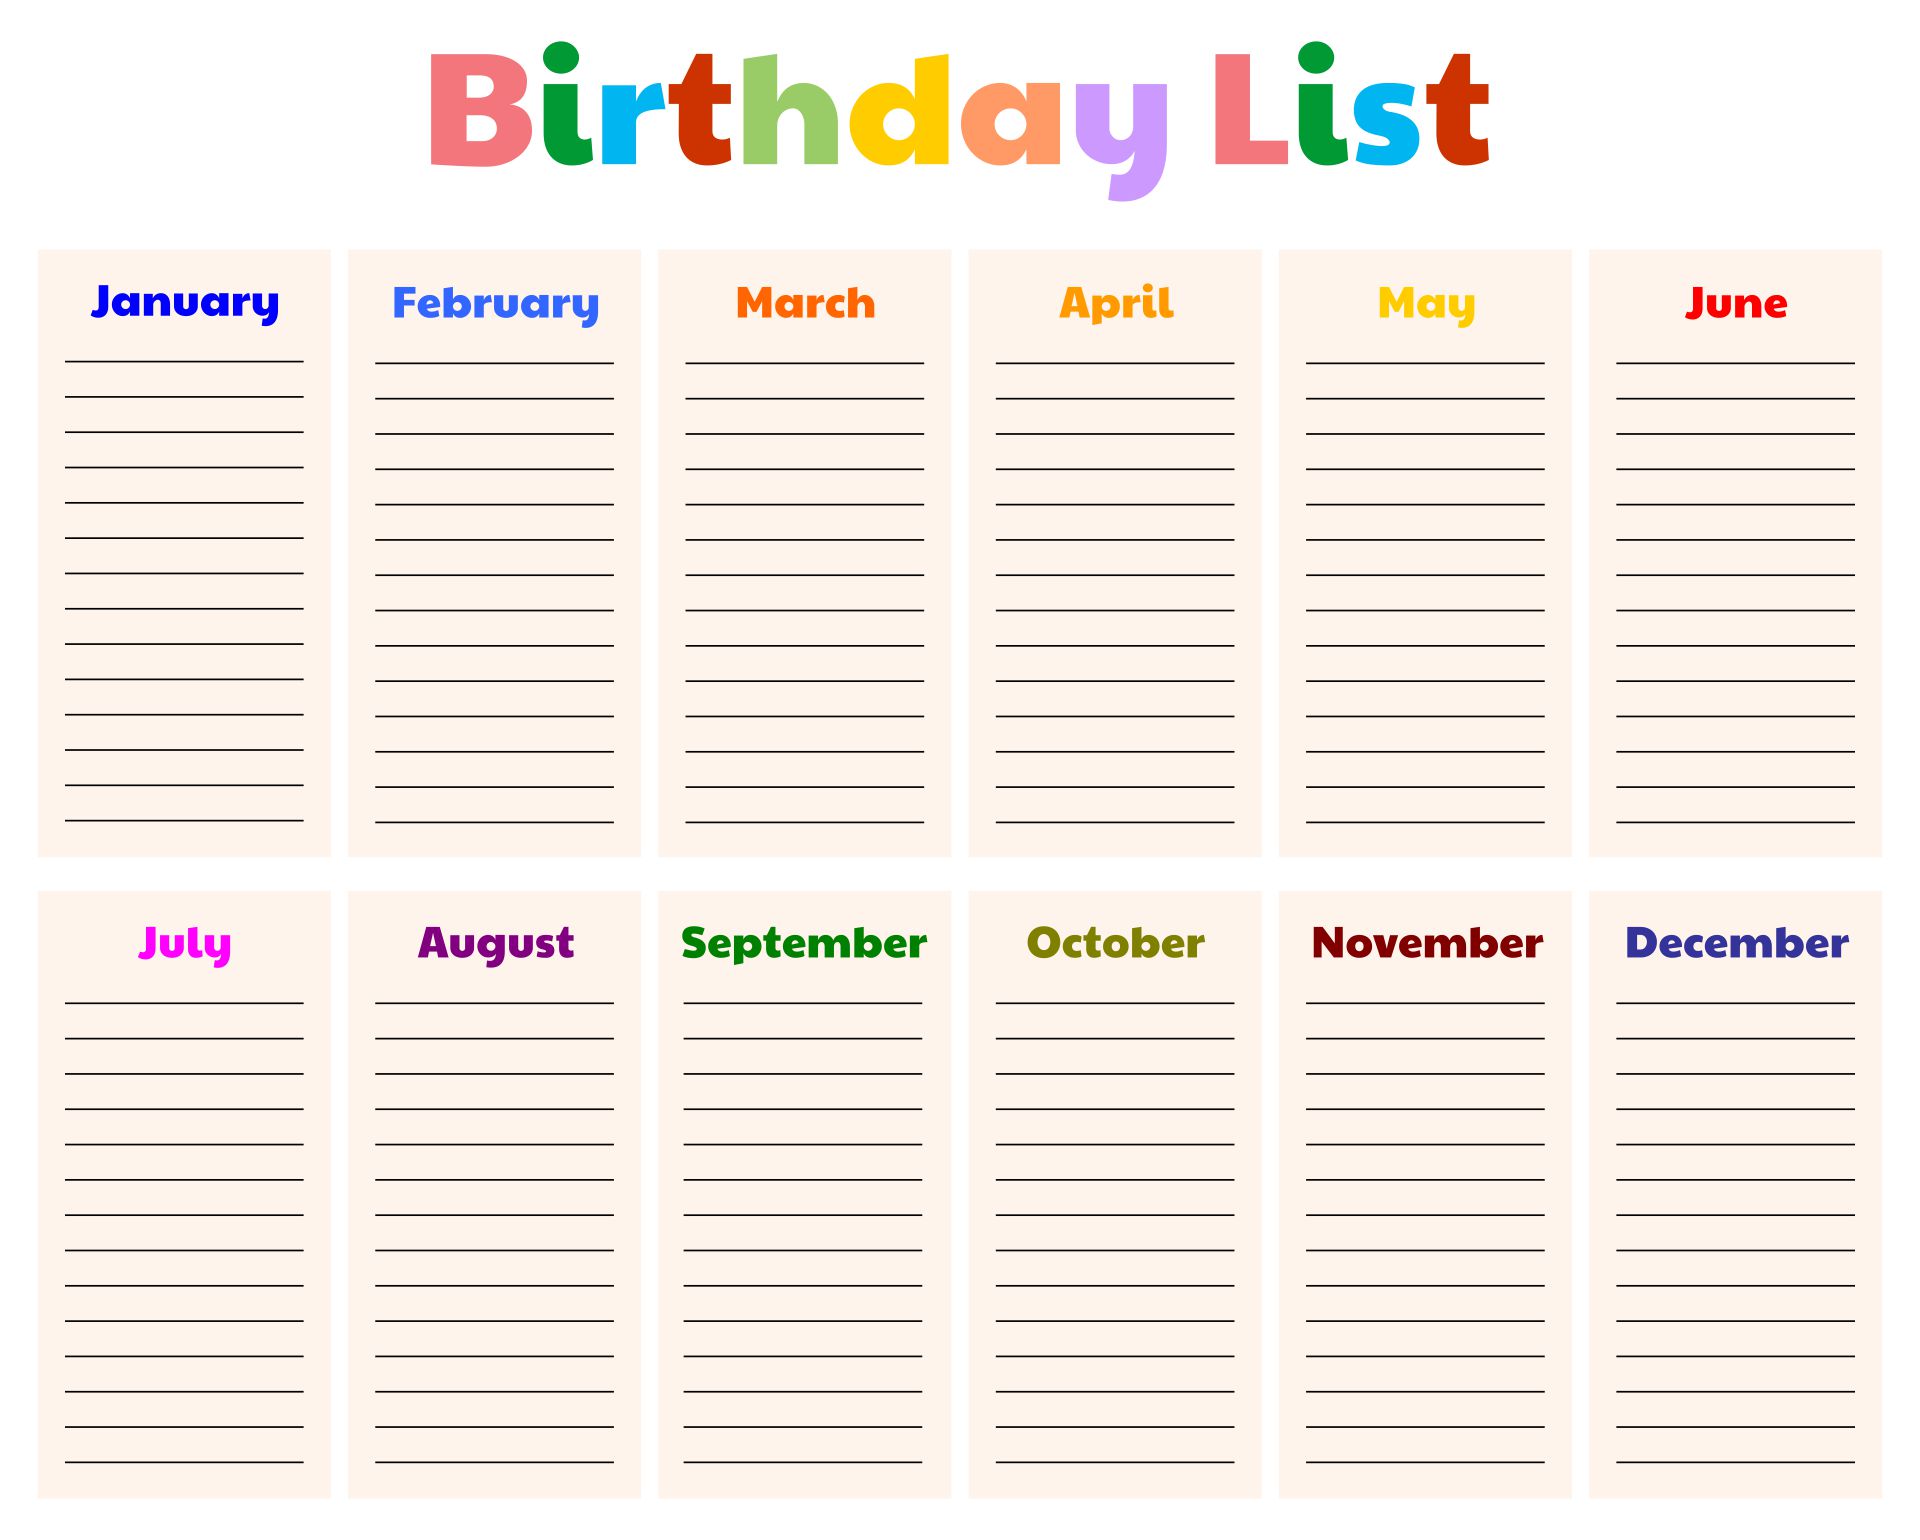 free-editable-birthday-list-template